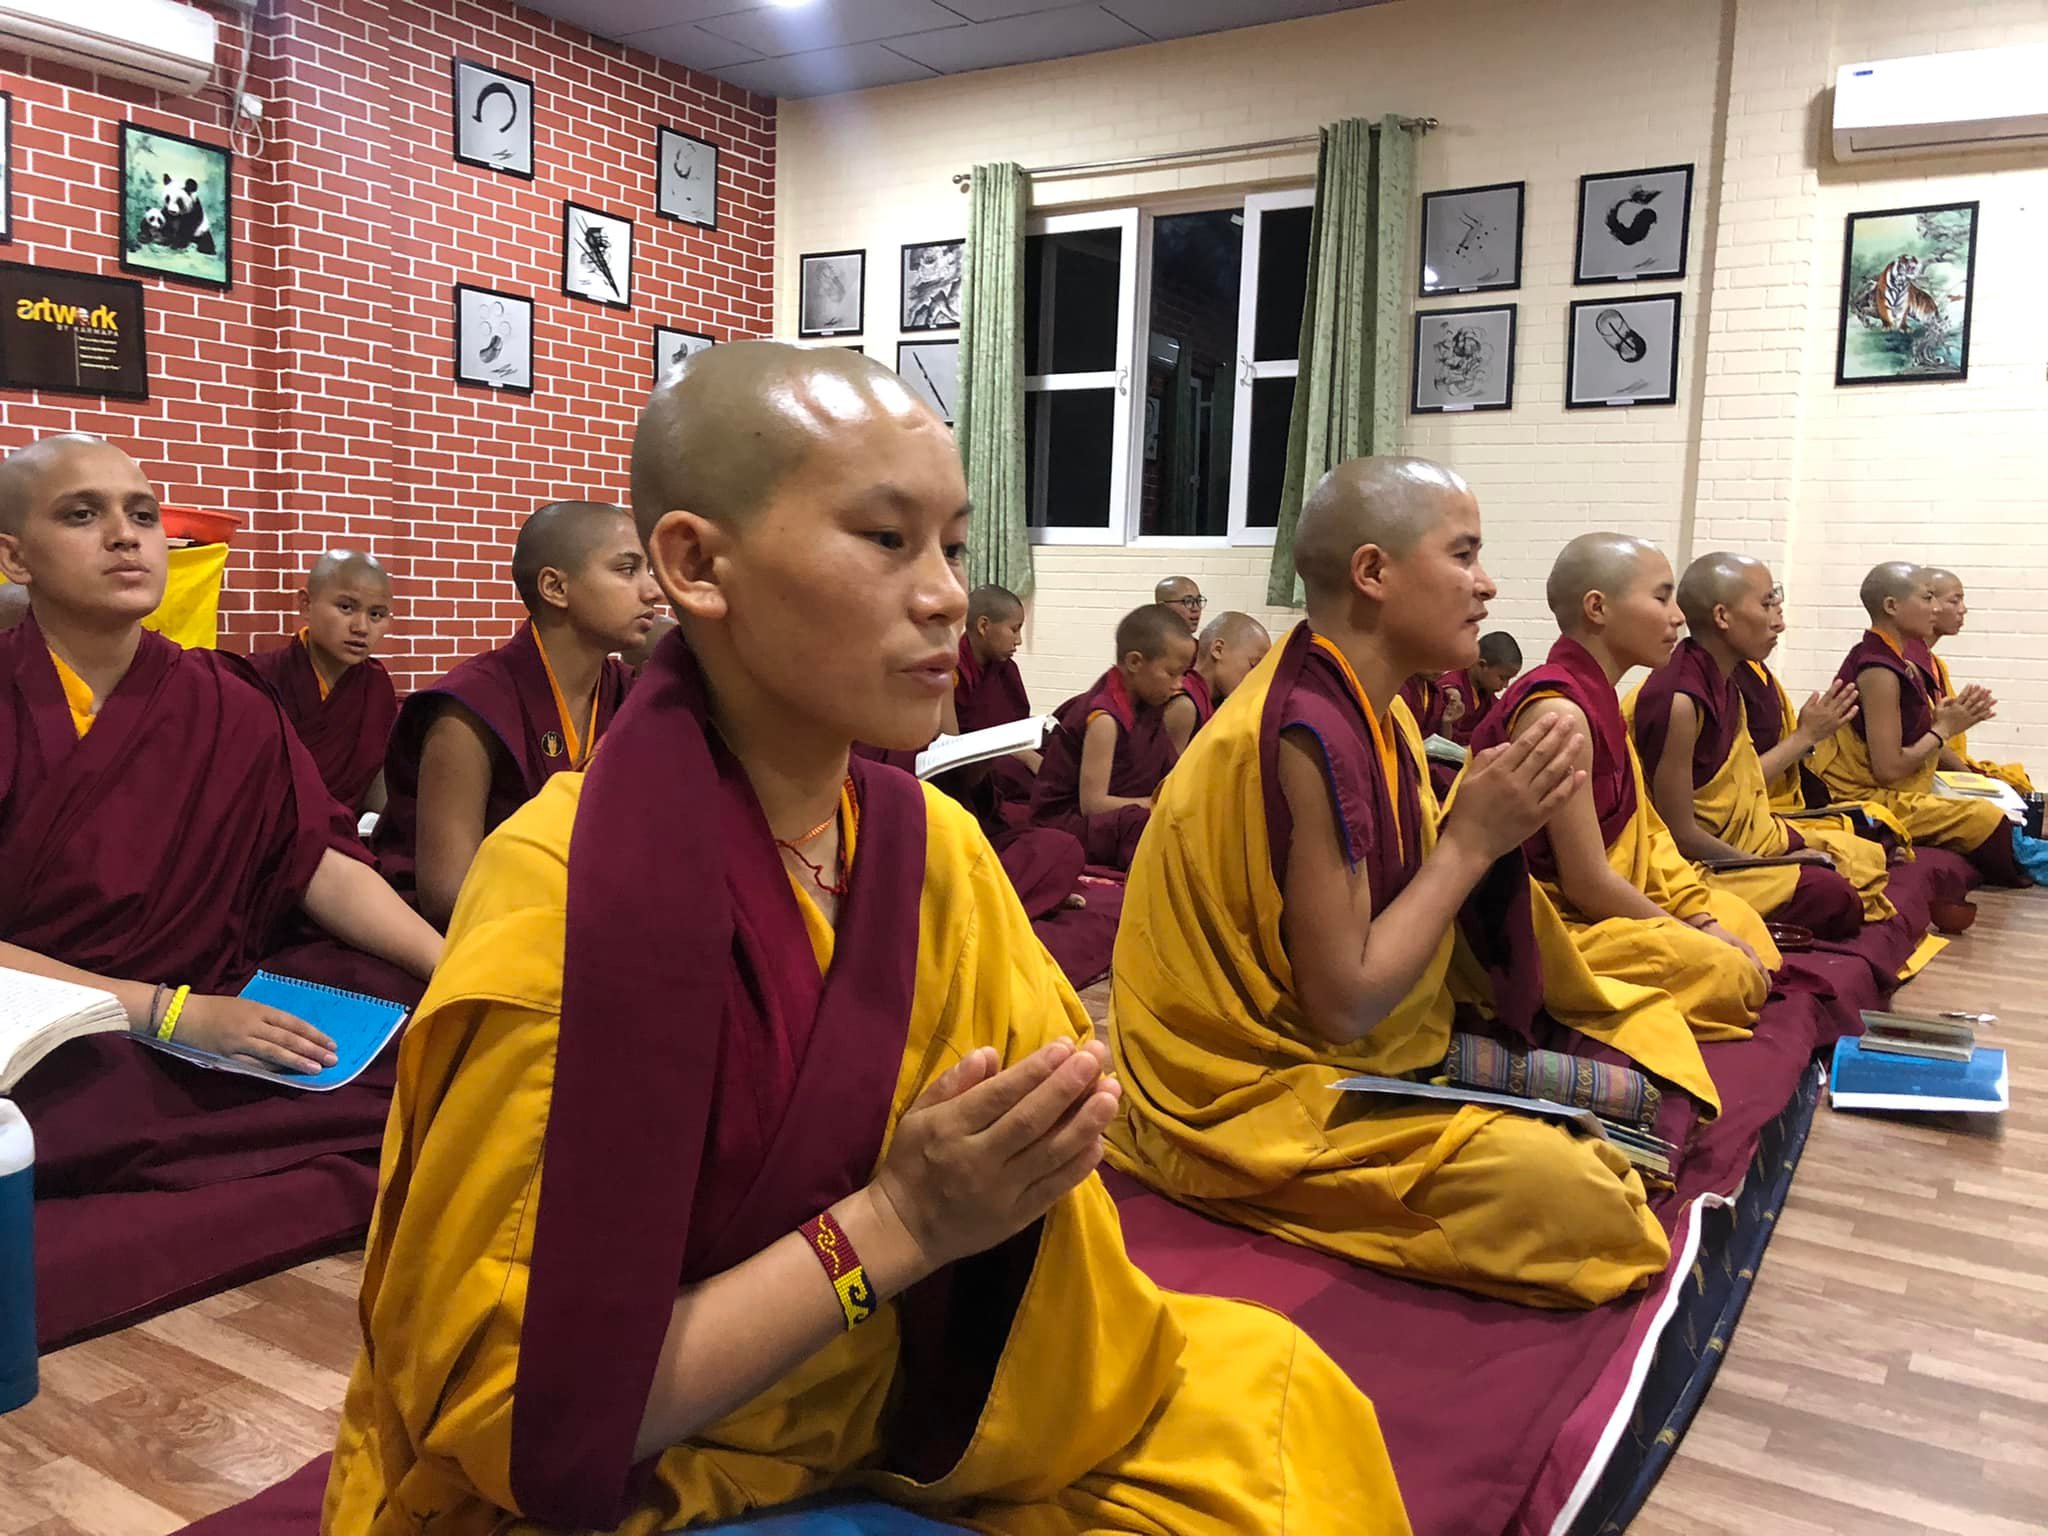 Day 10: Authentic Dharma Practice